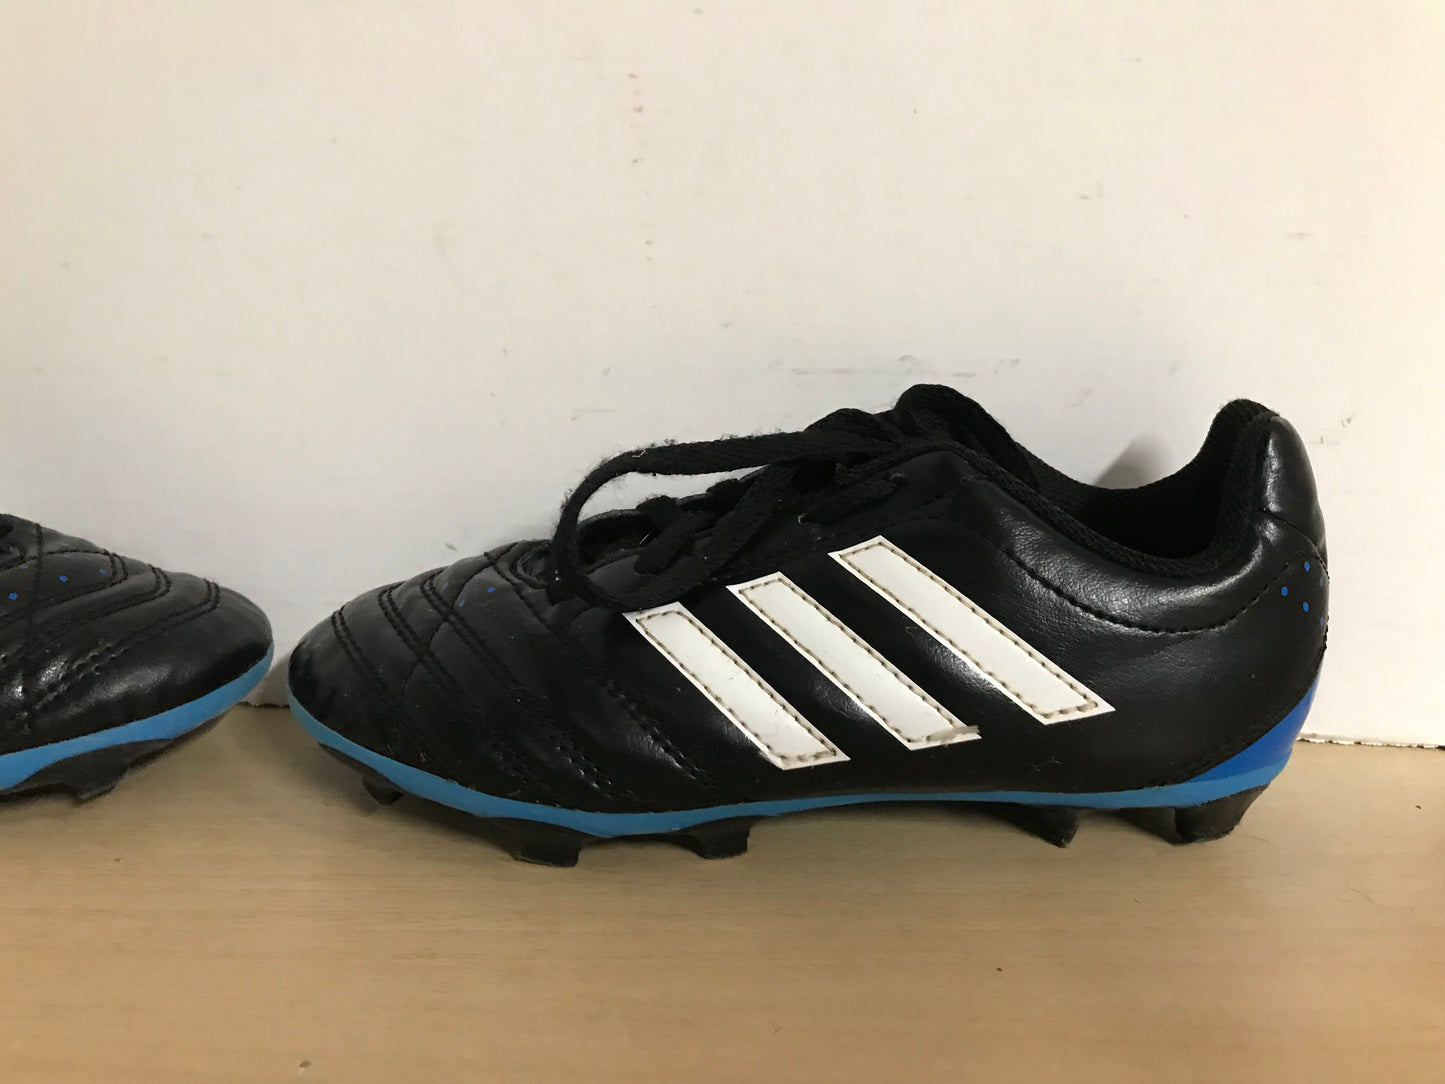 Soccer Shoes Cleats Child Size 1 Adidas Blue Black  Excellent